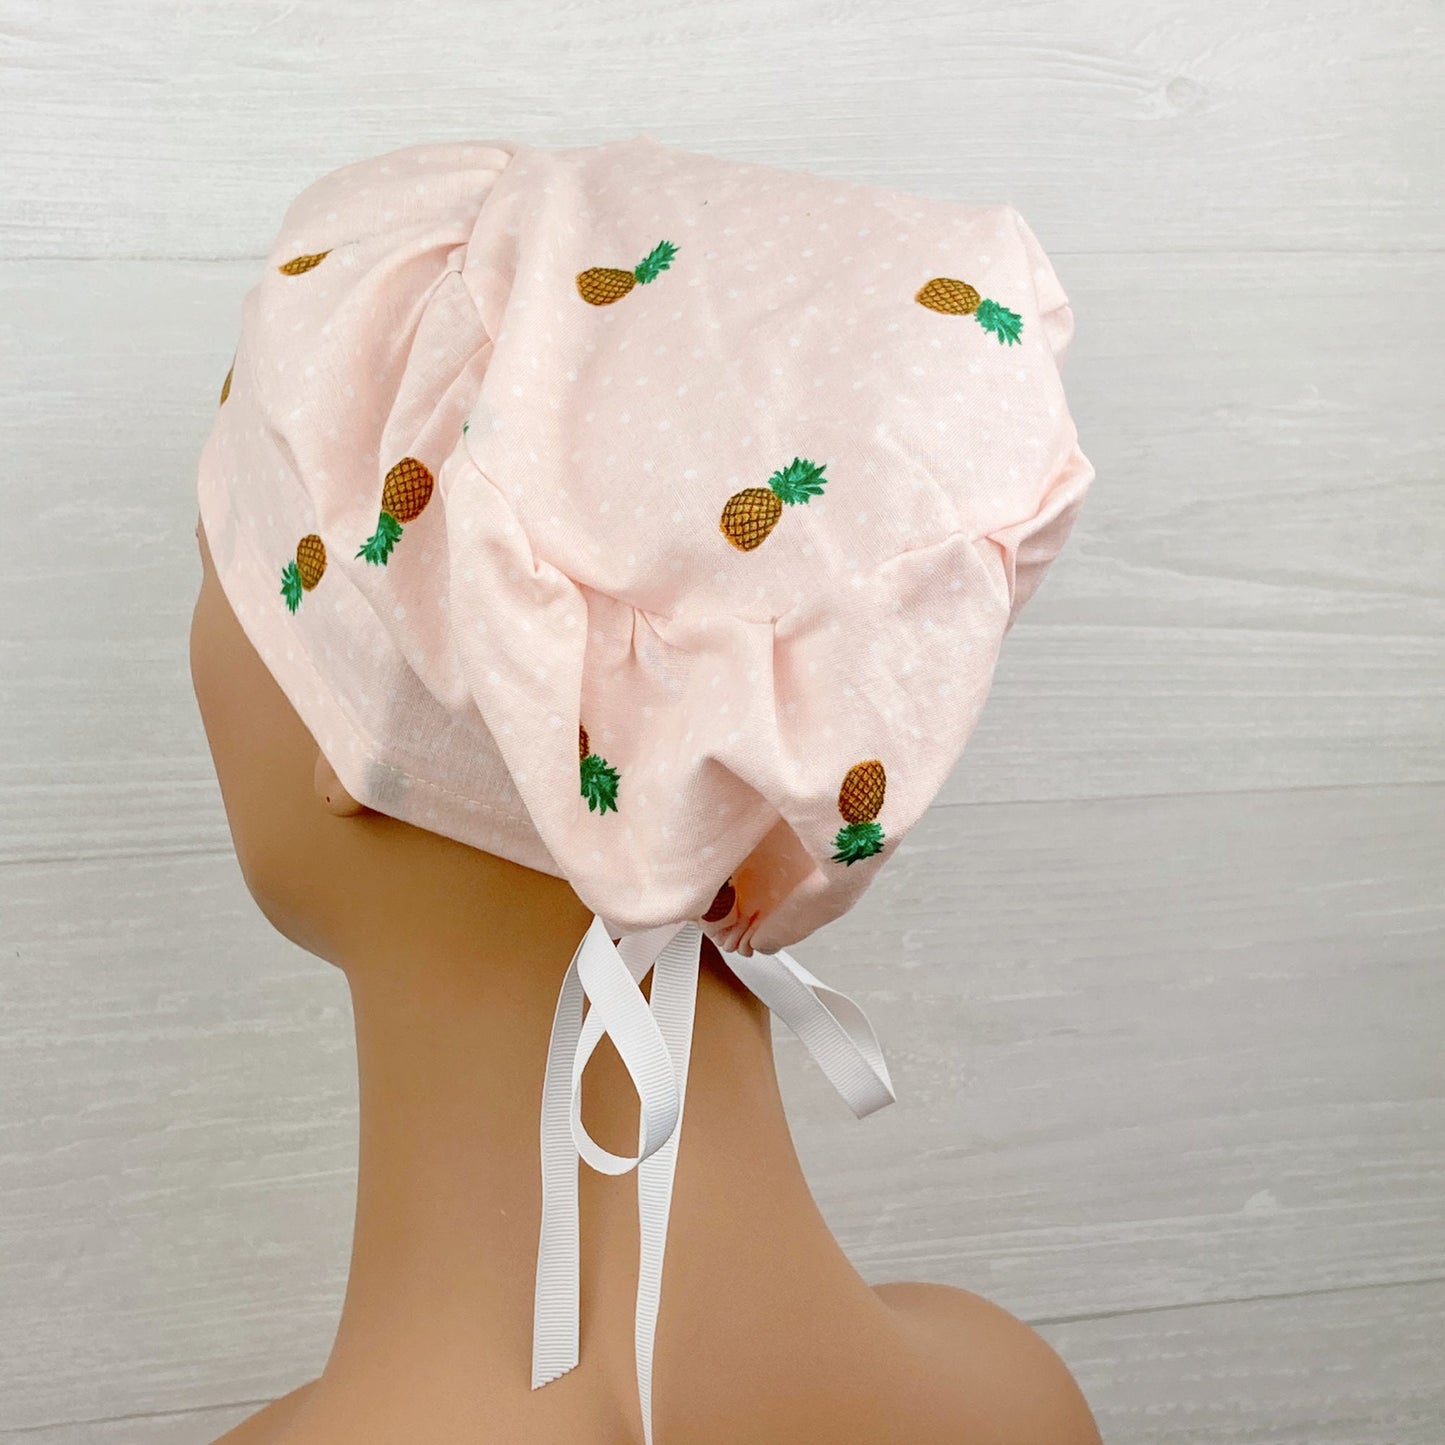 Pineapple Pink Polkadot Women's Tieback Hat